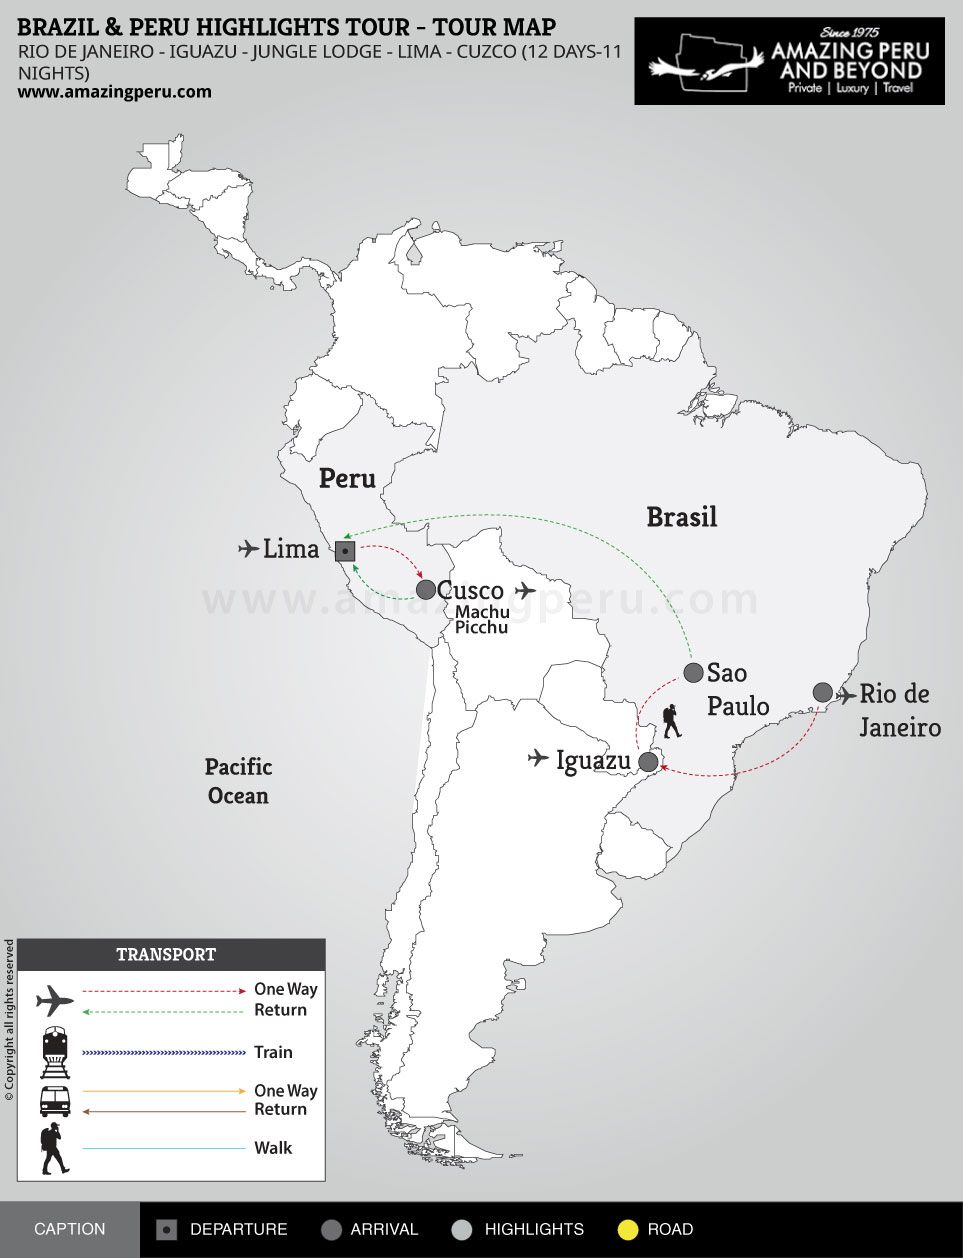 Brazil & Peru Highlights Tour - 12 days / 11 nights.